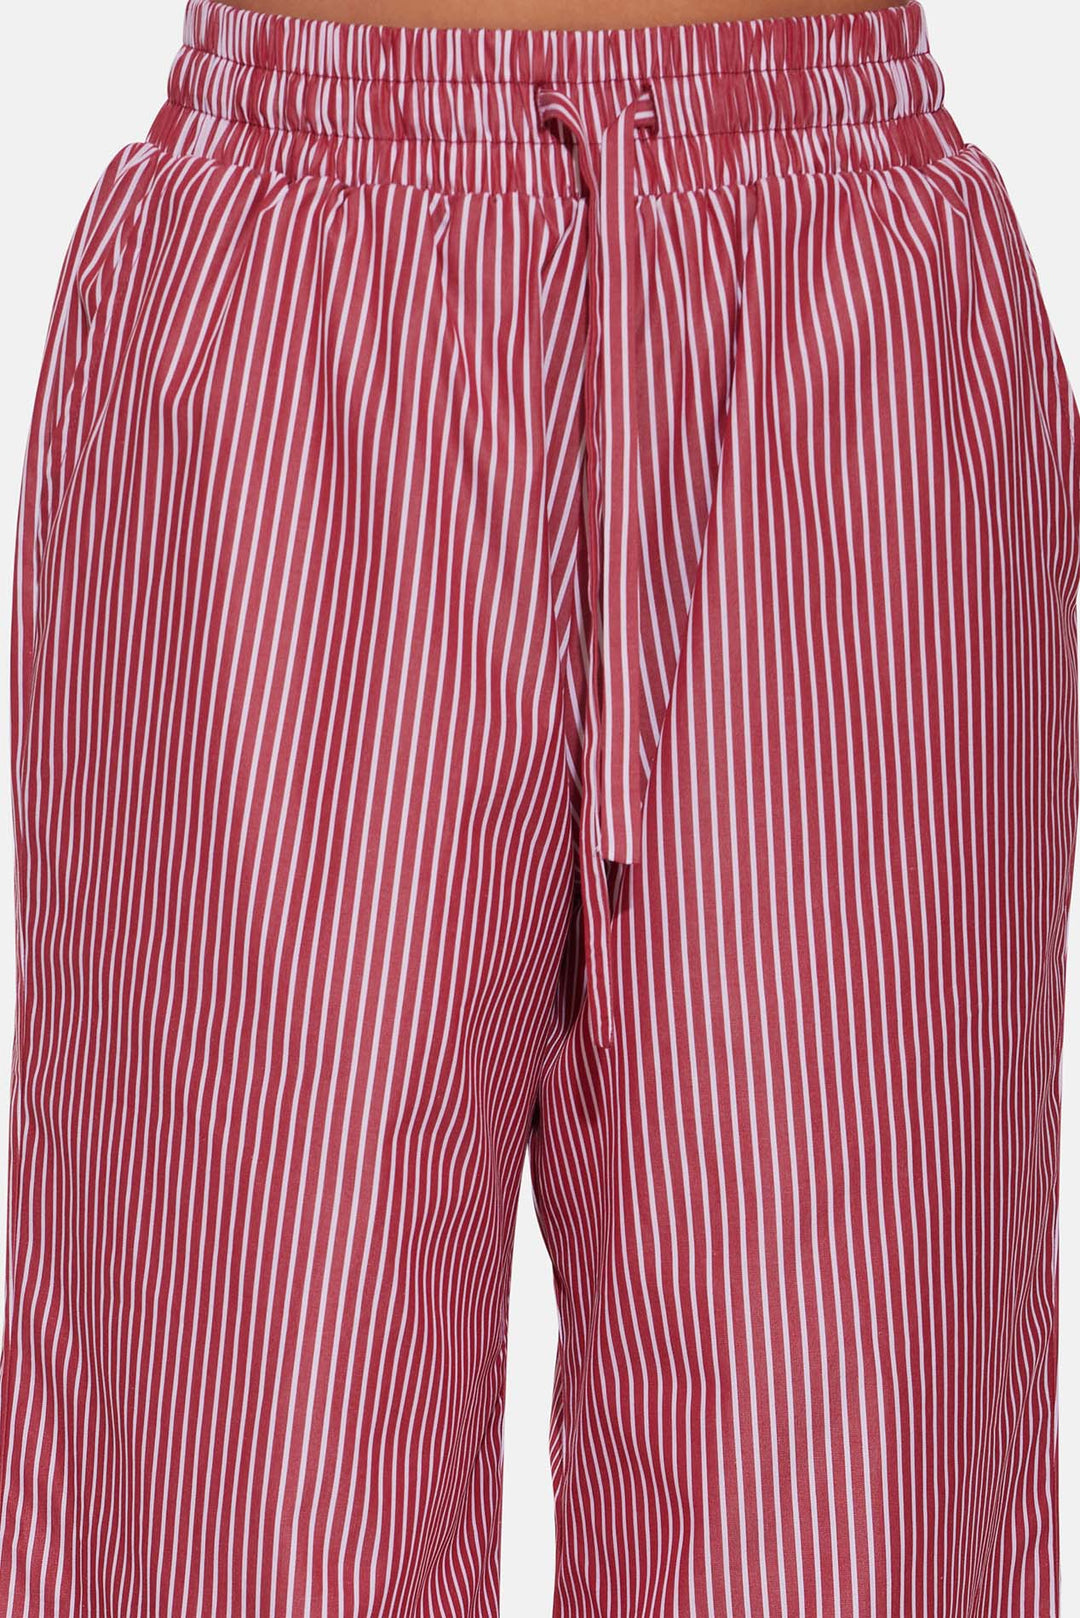 Georgica Beach Poplin Pant Red/White Stripe